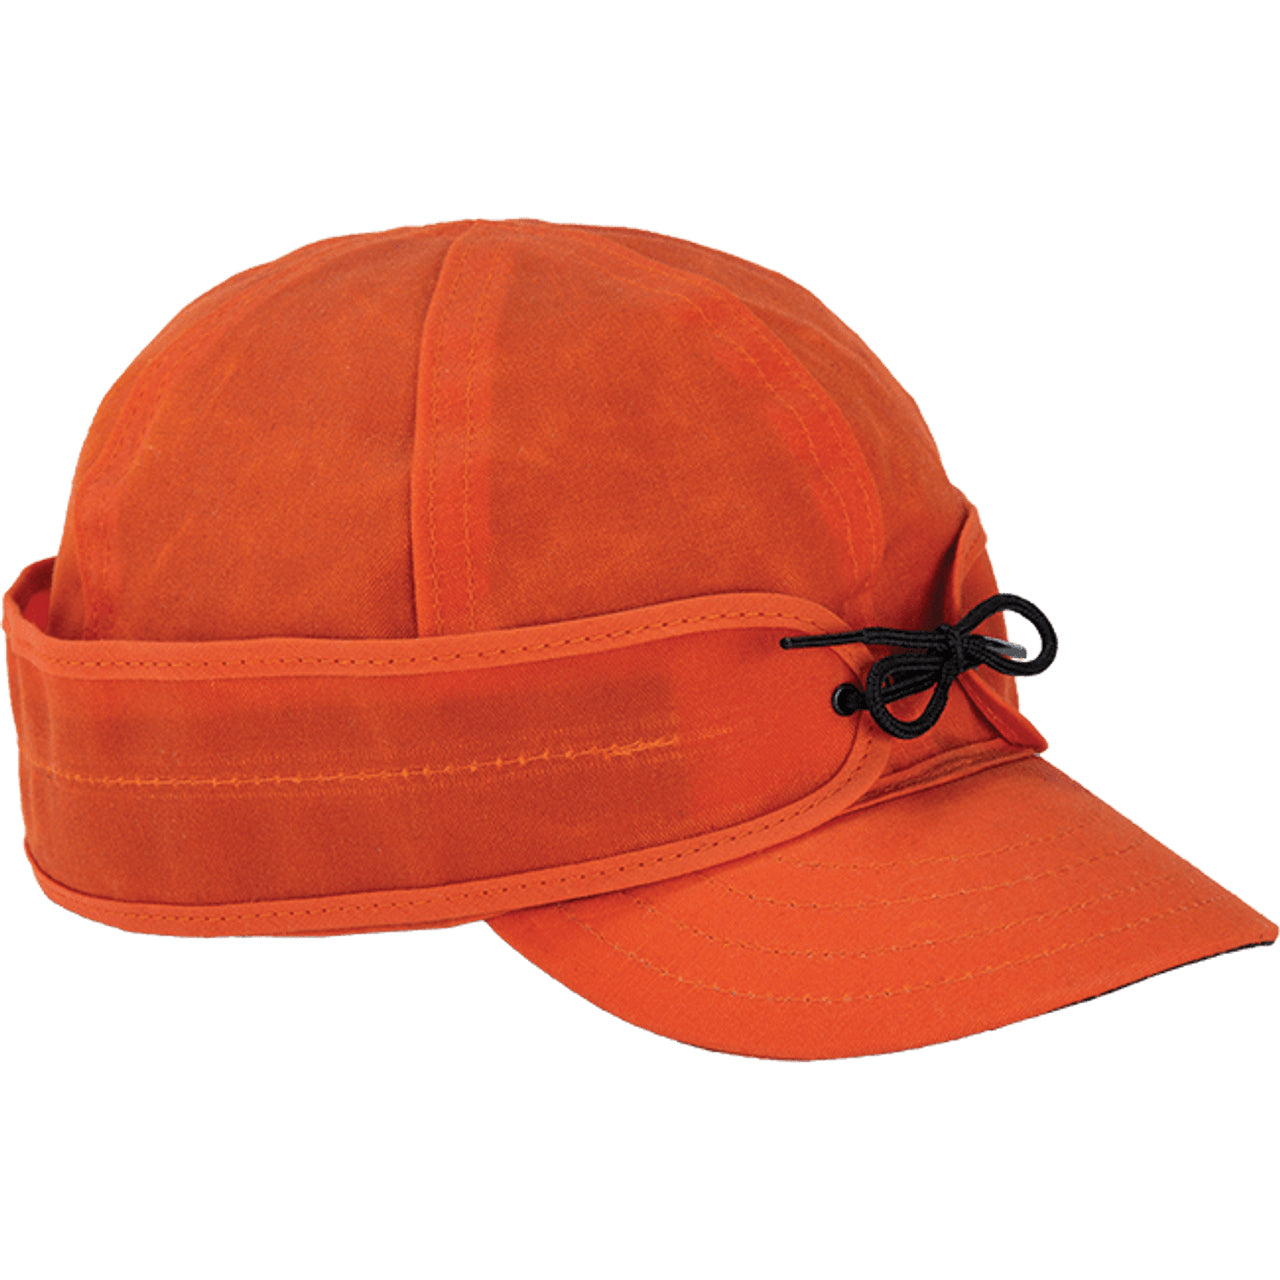 Original Stormy Kromer Waxed Cotton Cap in Blaze Orange